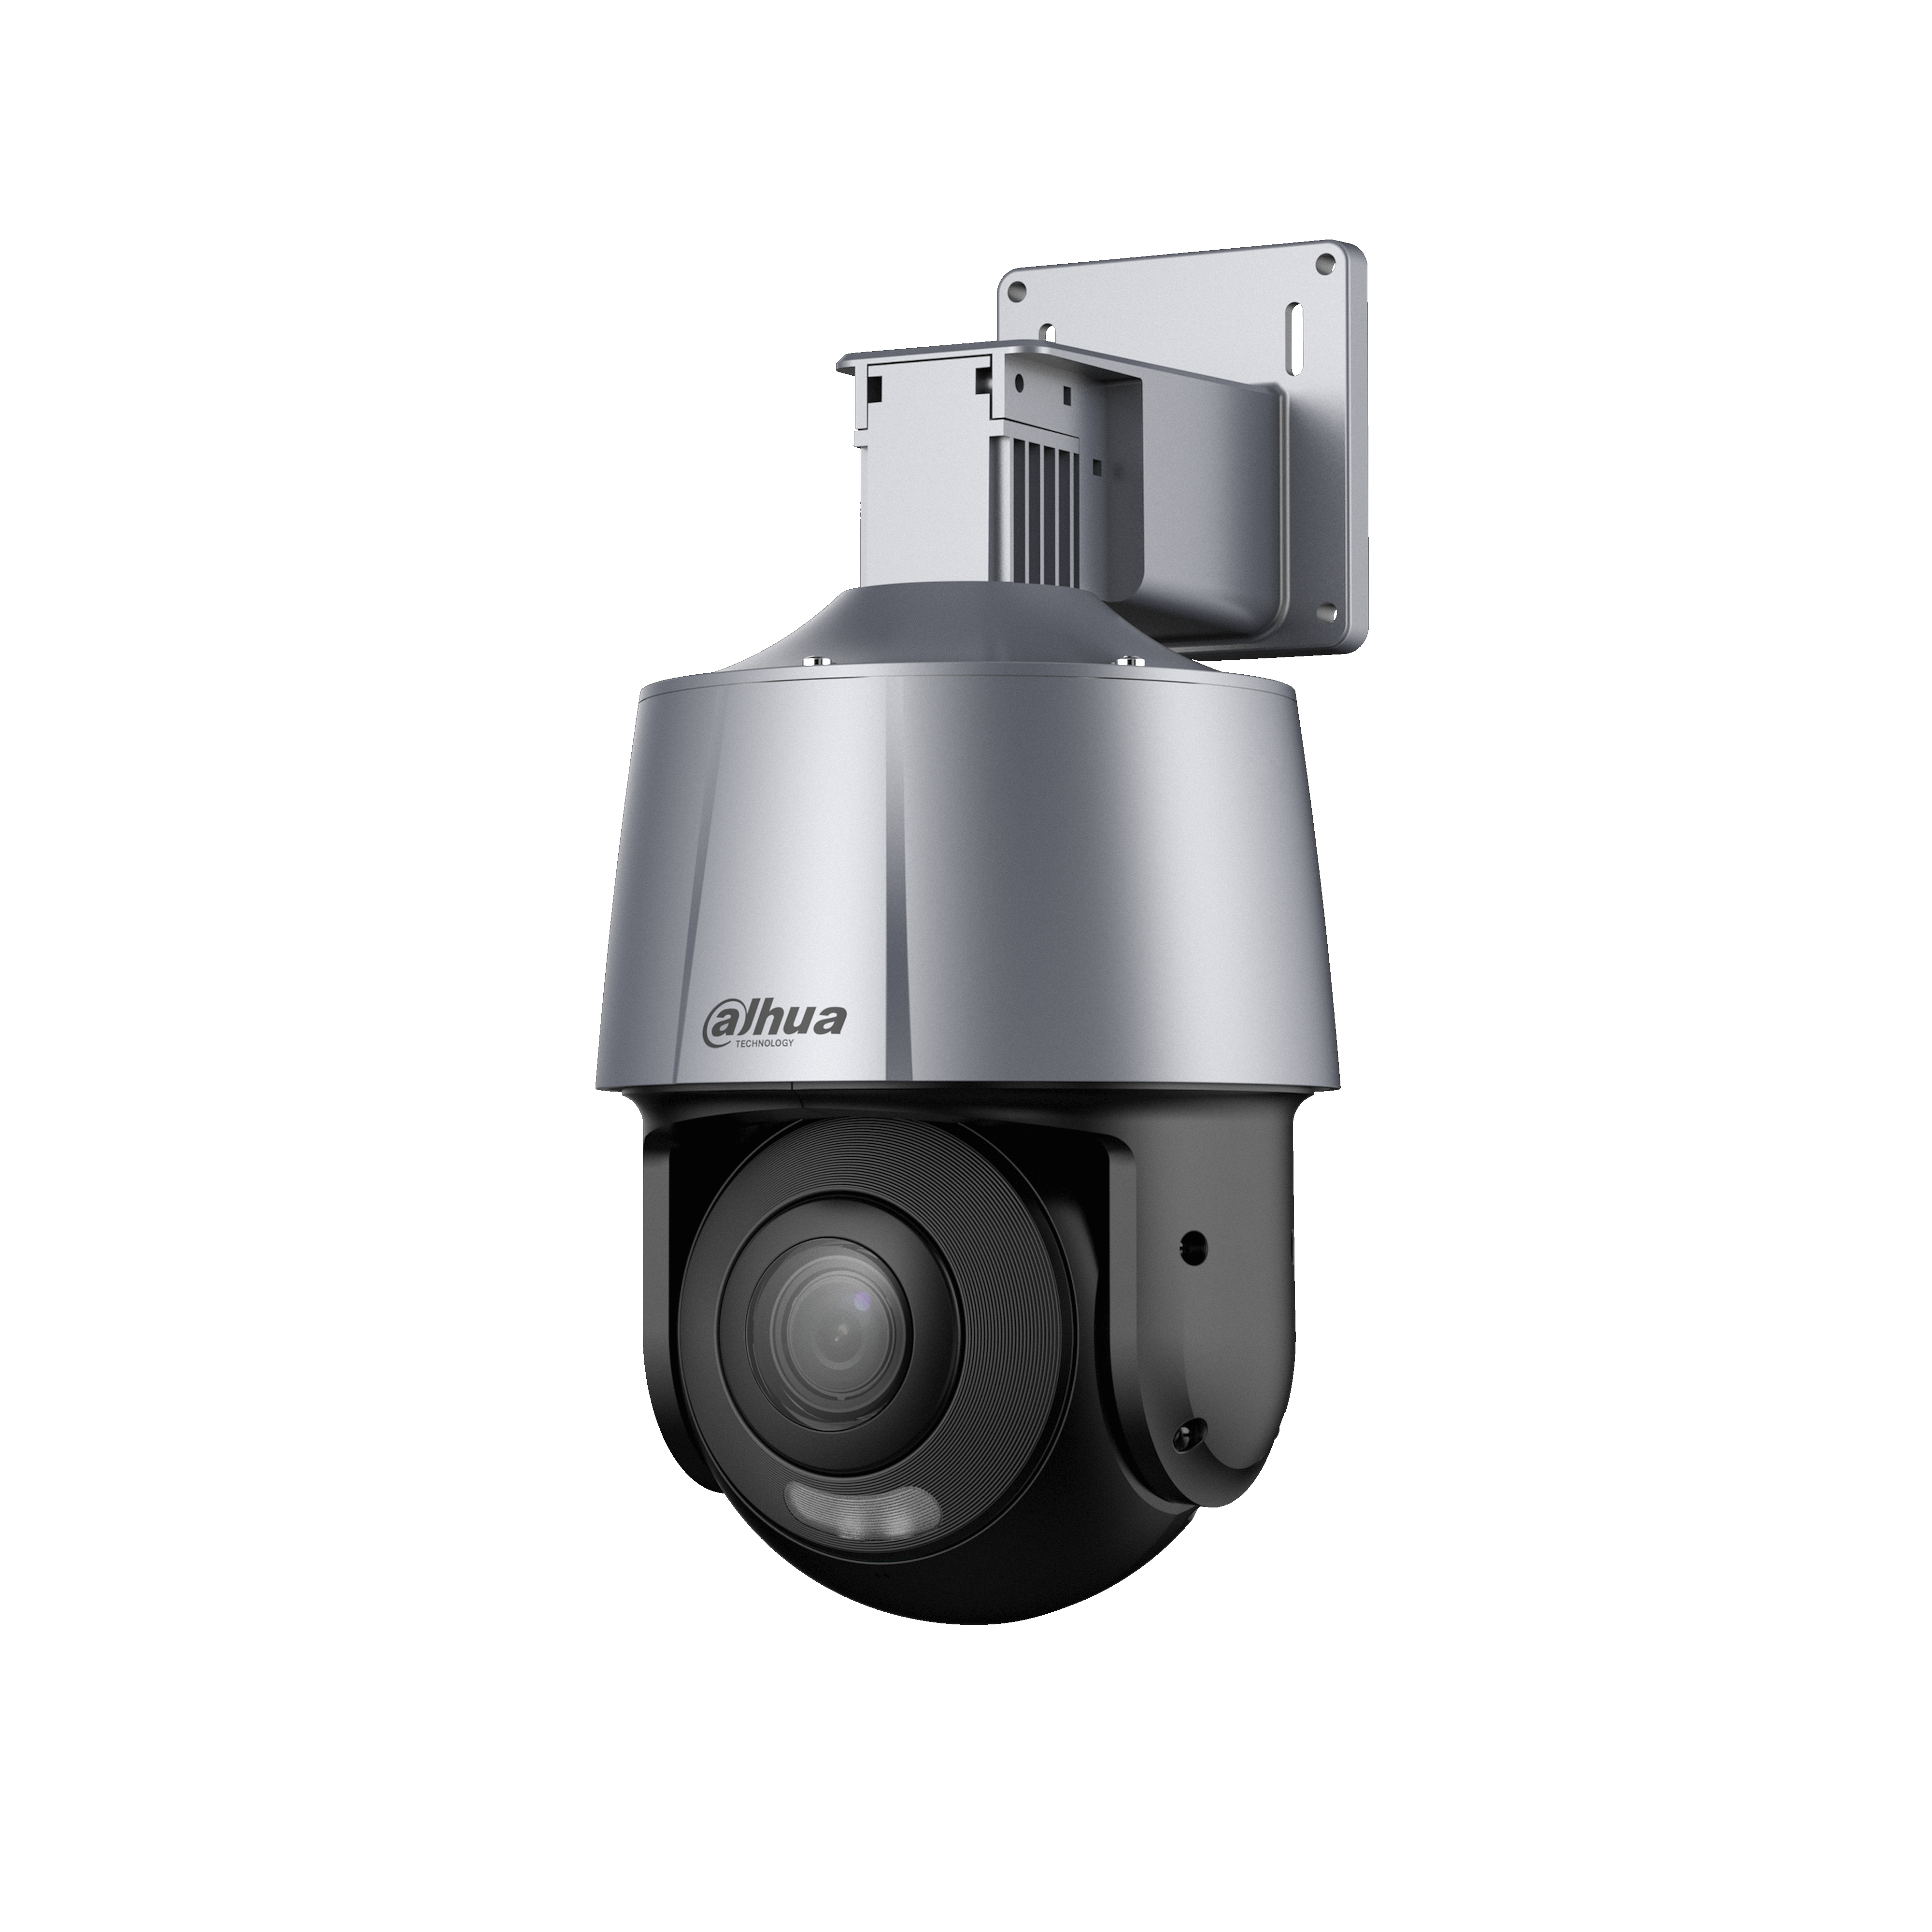 DAHUA SD3A400-GN-A-PV 4 MP Full-Color Network PT Camera